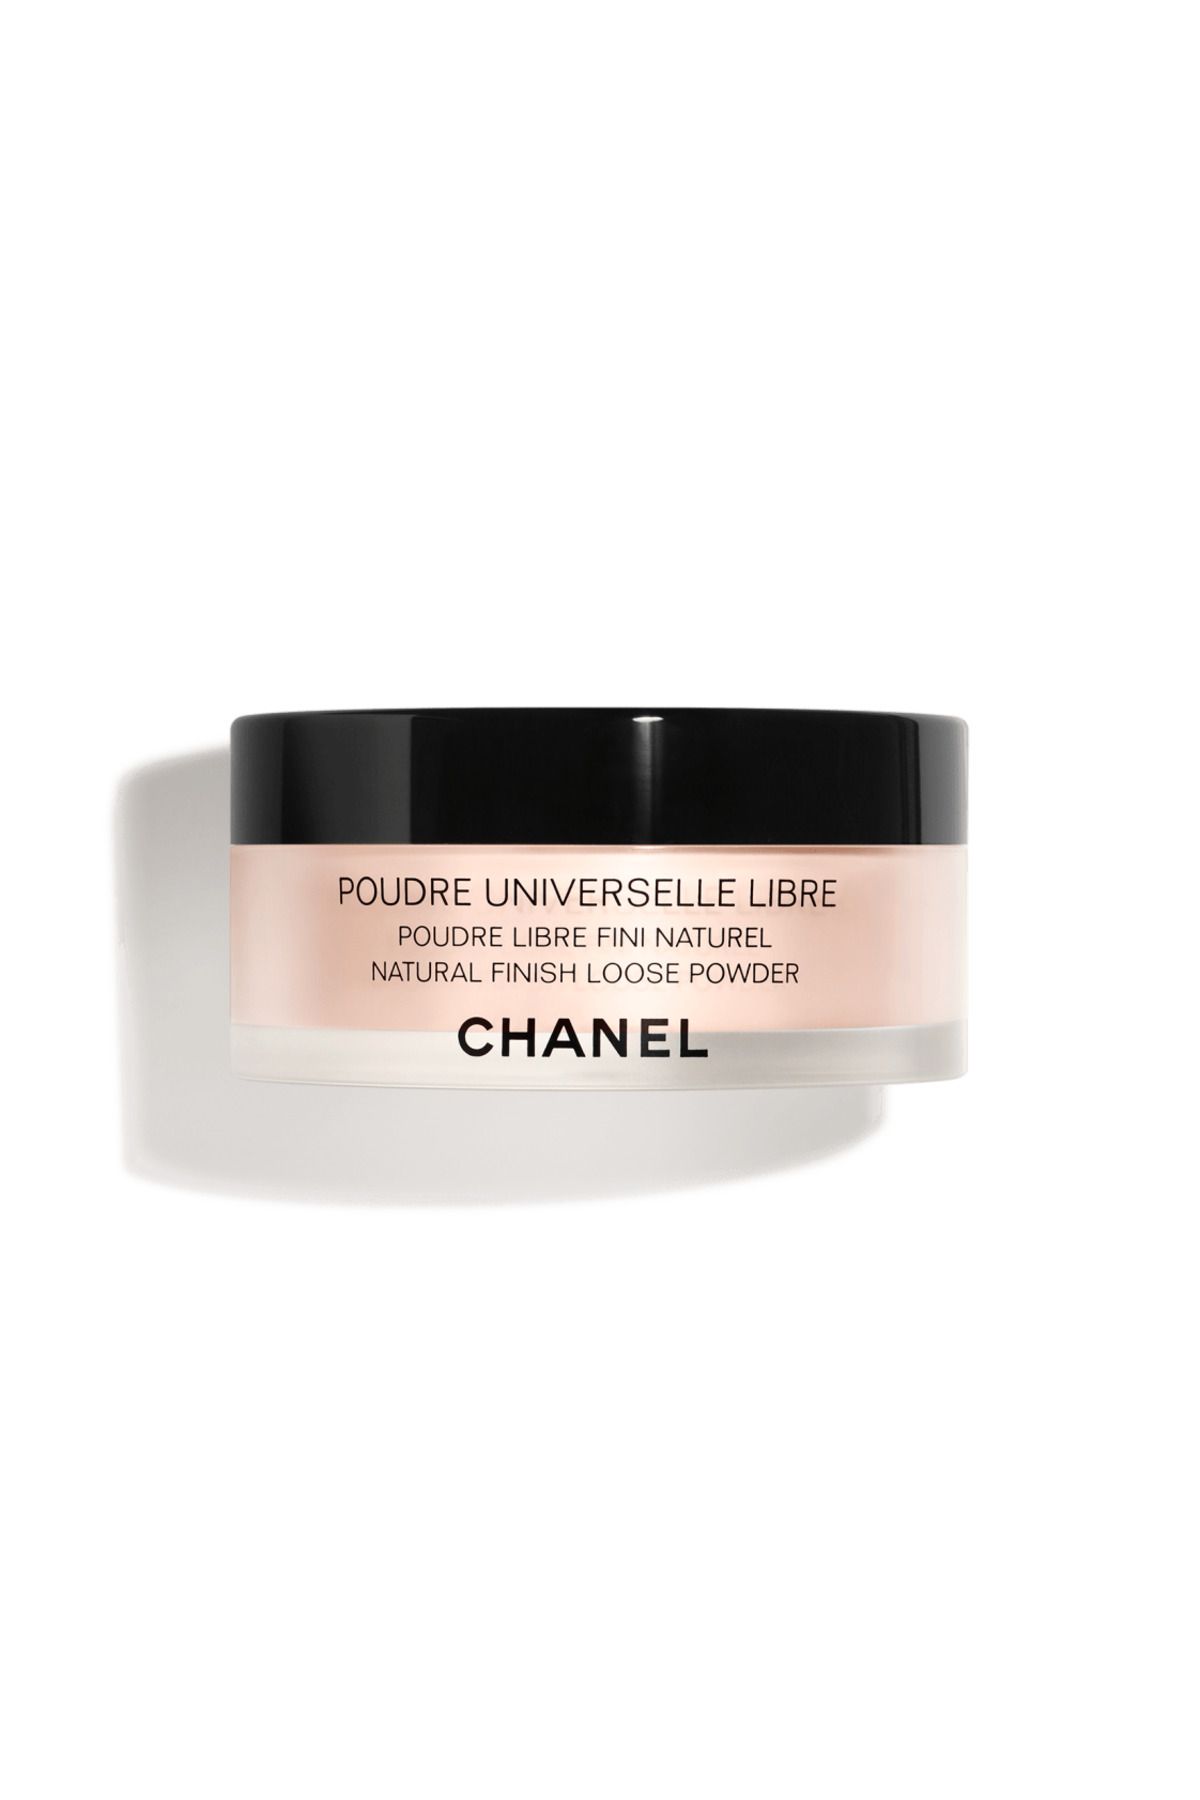 Chanel POUDRE UNIVERSELLE LIBRE - Cilt Tonunu Eşitleyen Mat Bitişli Pudra